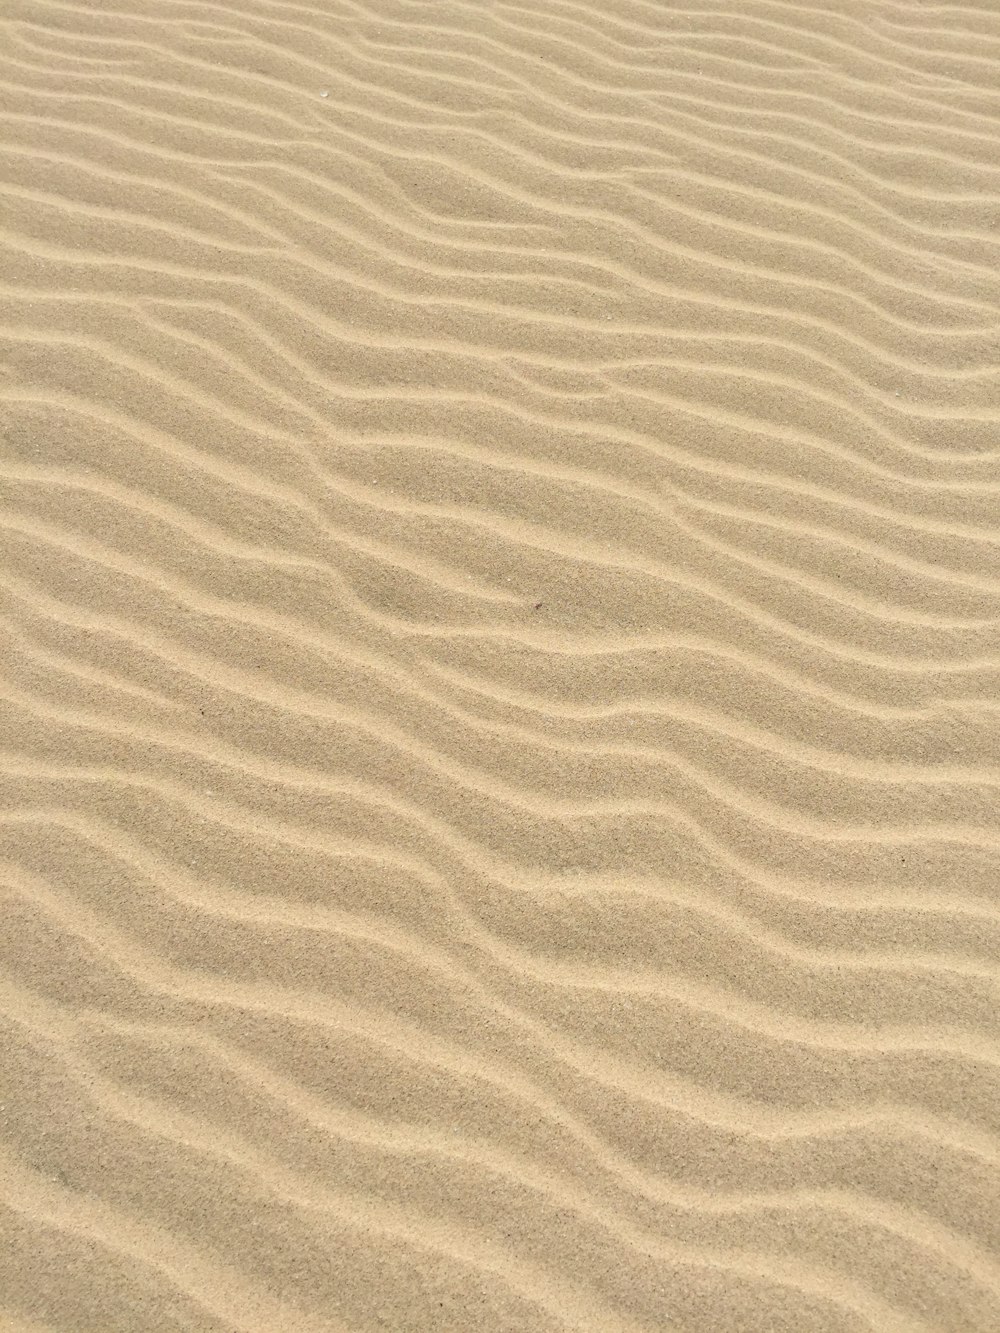 brown sands